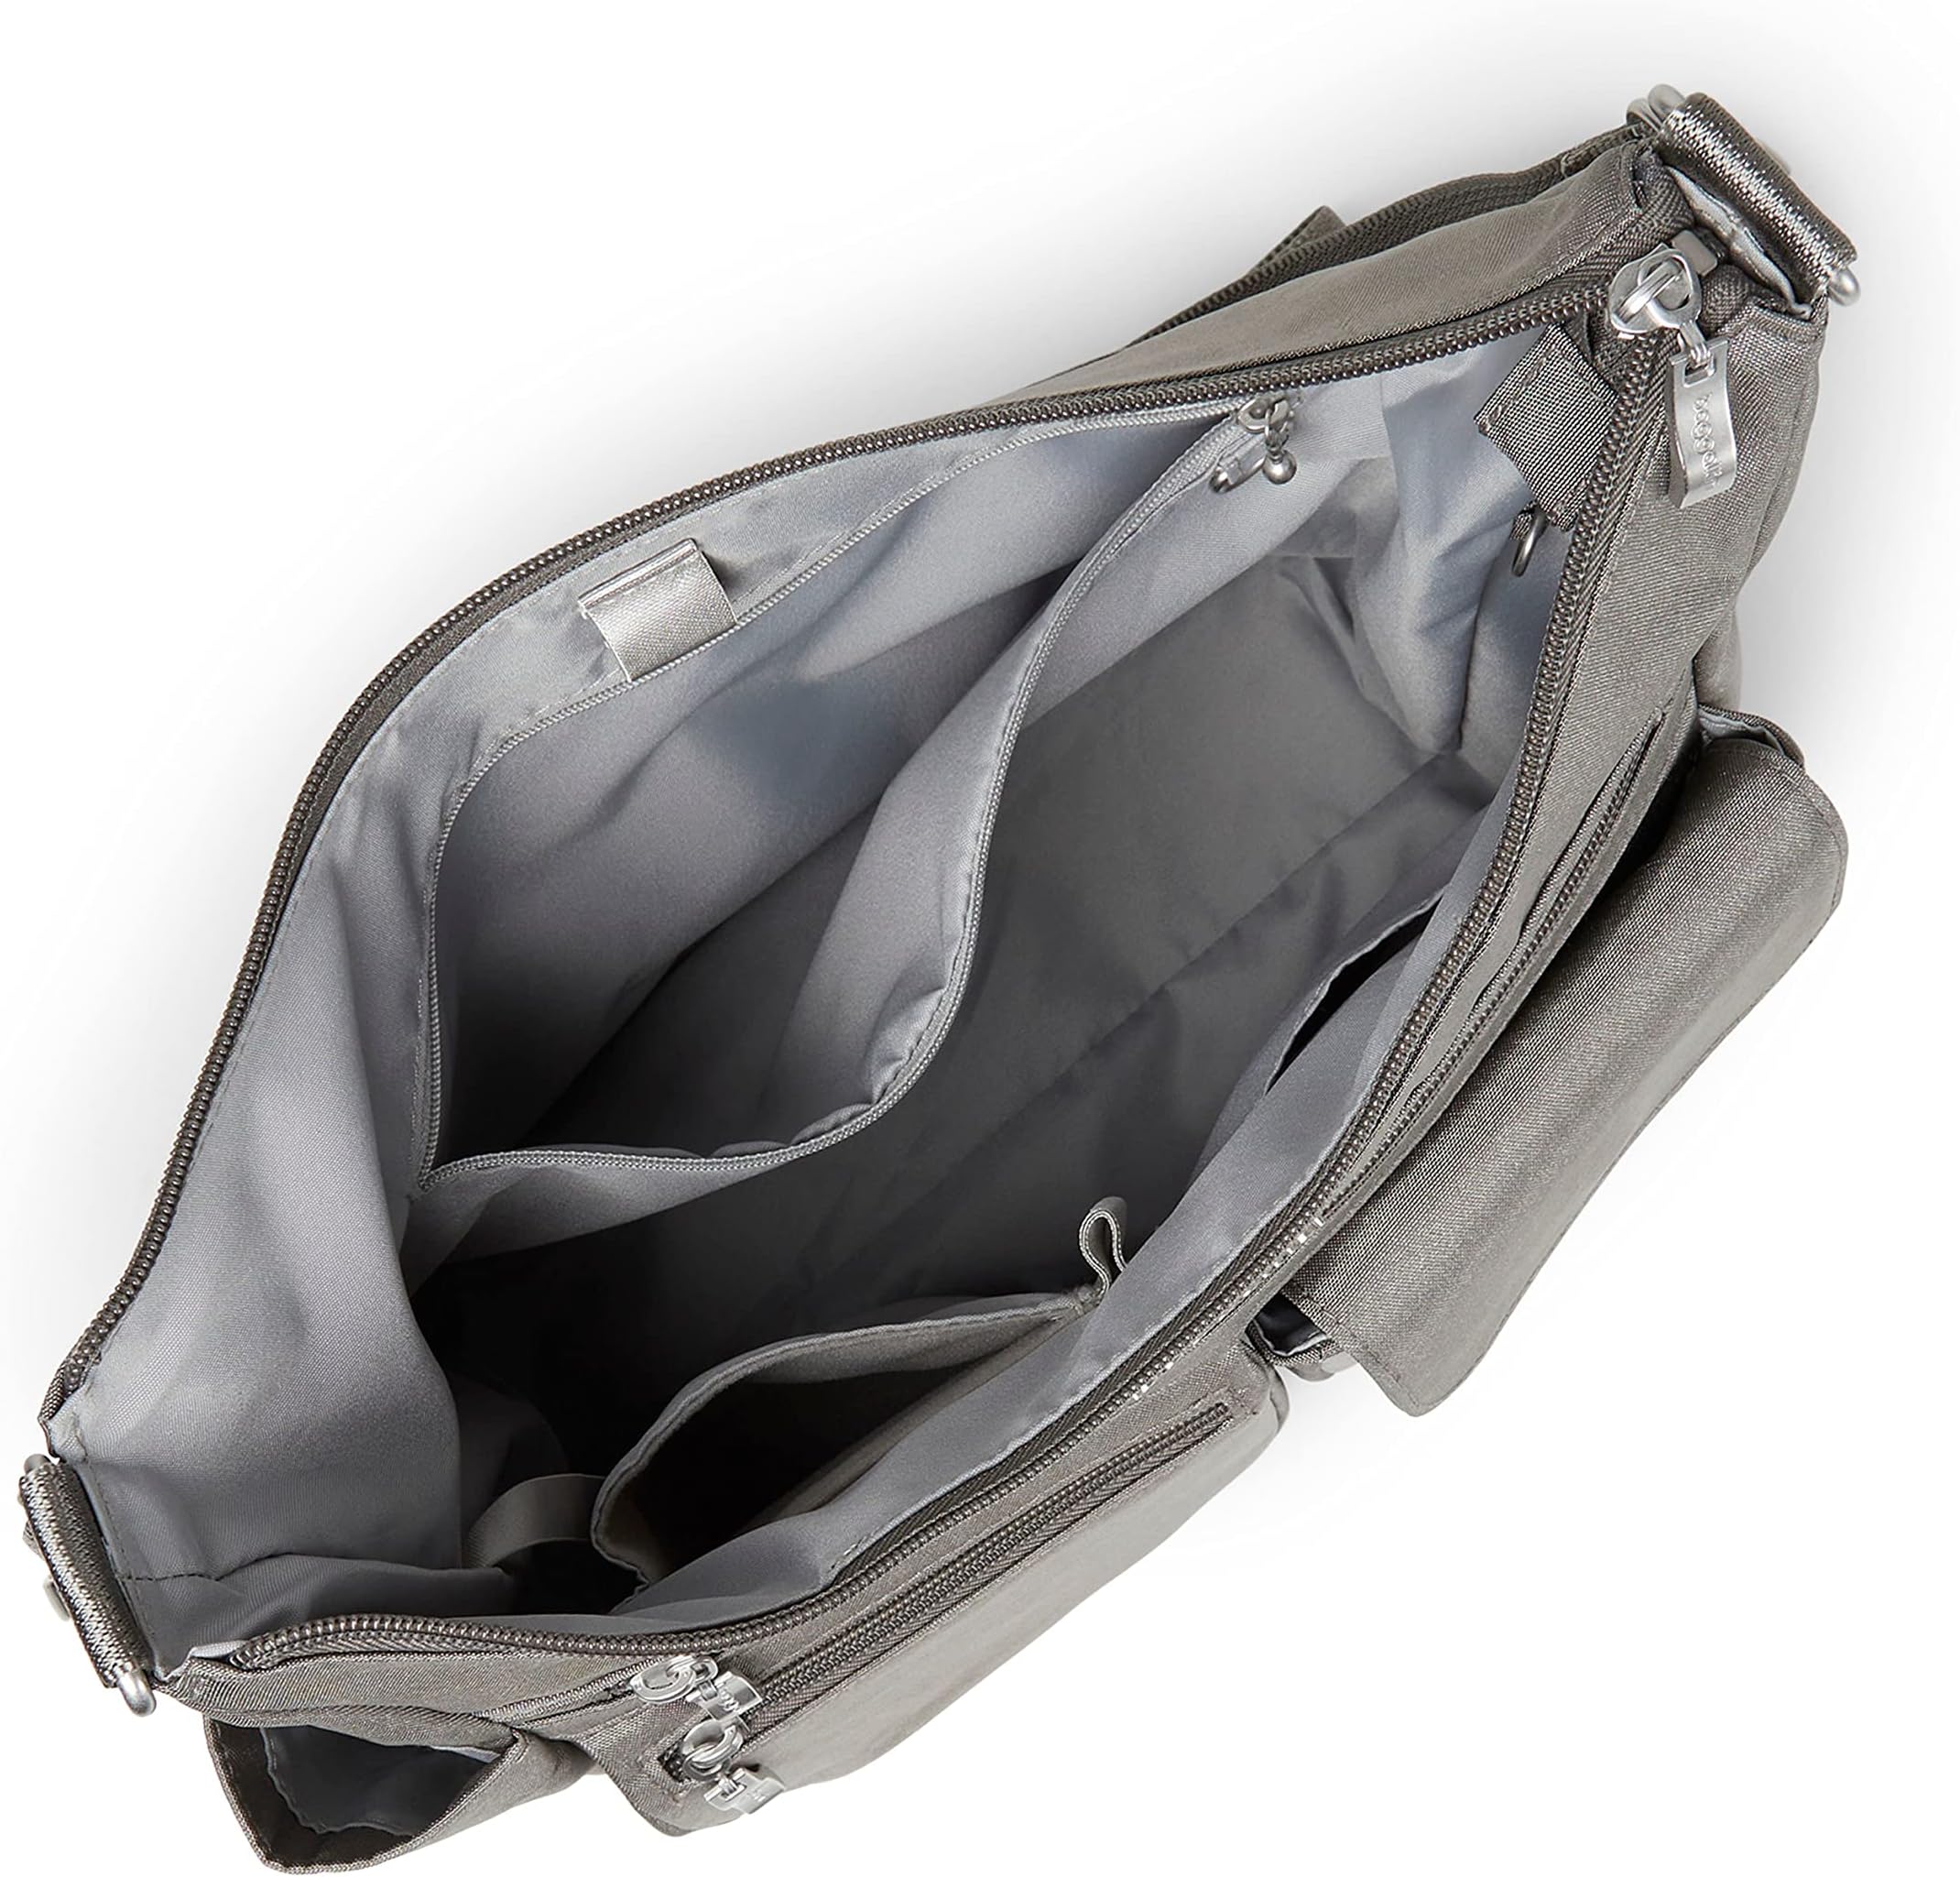 Современная универсальная сумка Baggallini, цвет Sterling Shimmer